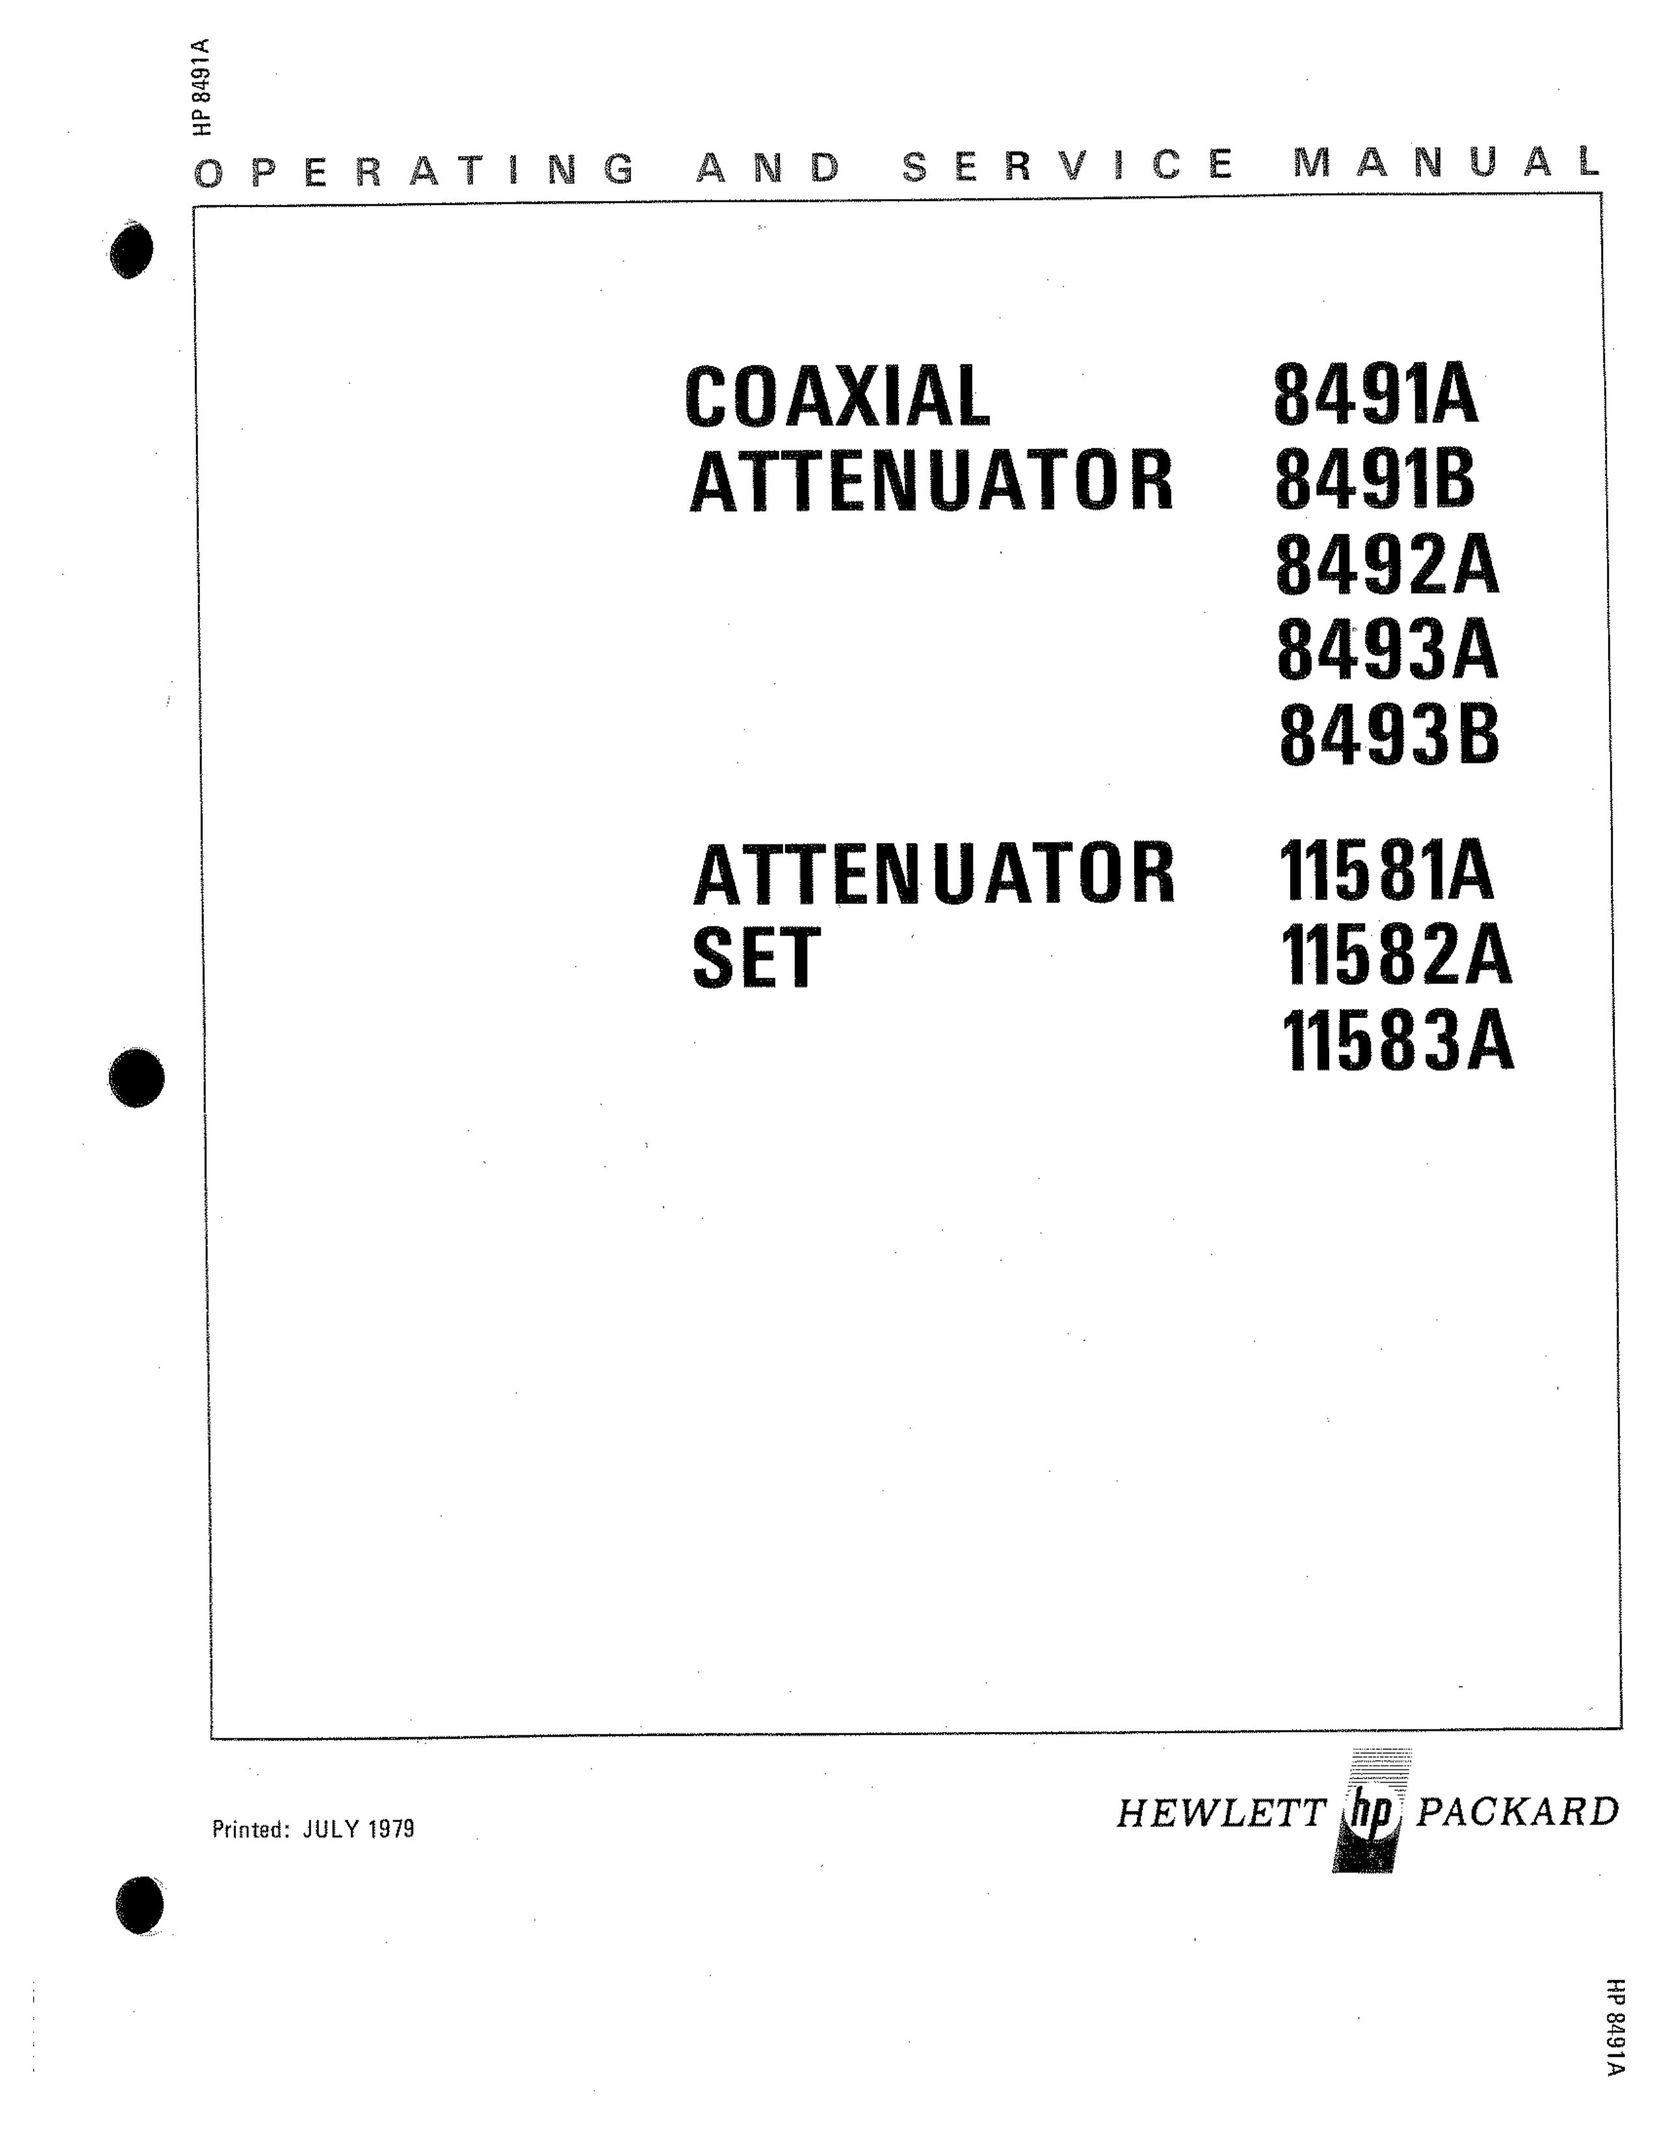 HP (Hewlett-Packard) 11583A TV Cables User Manual